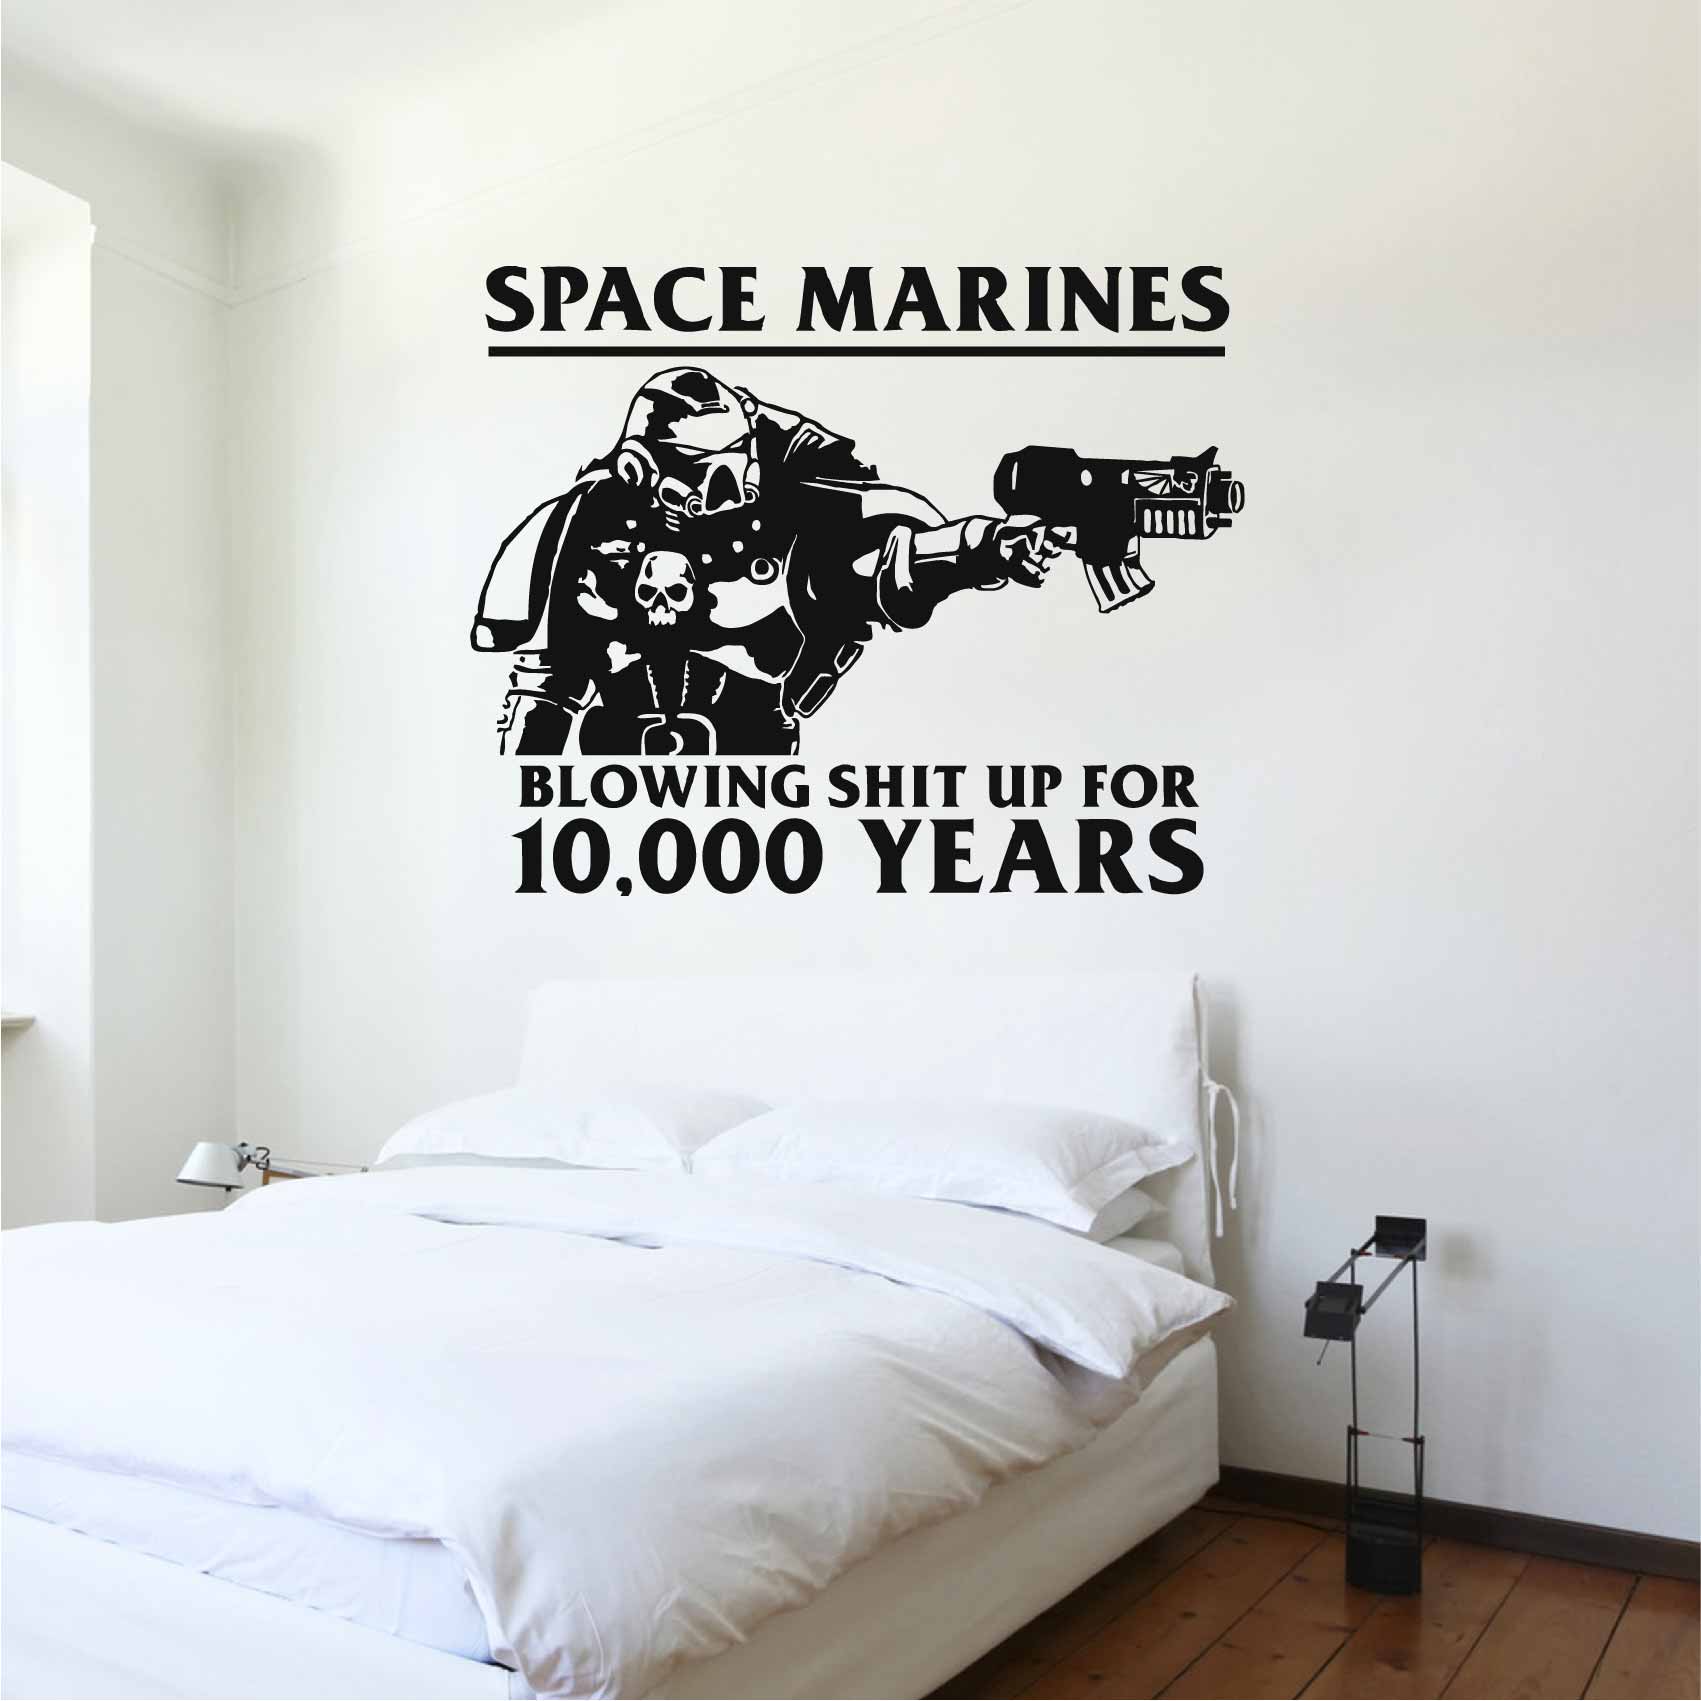 Stickers Space Marines - Autocollant muraux et deco